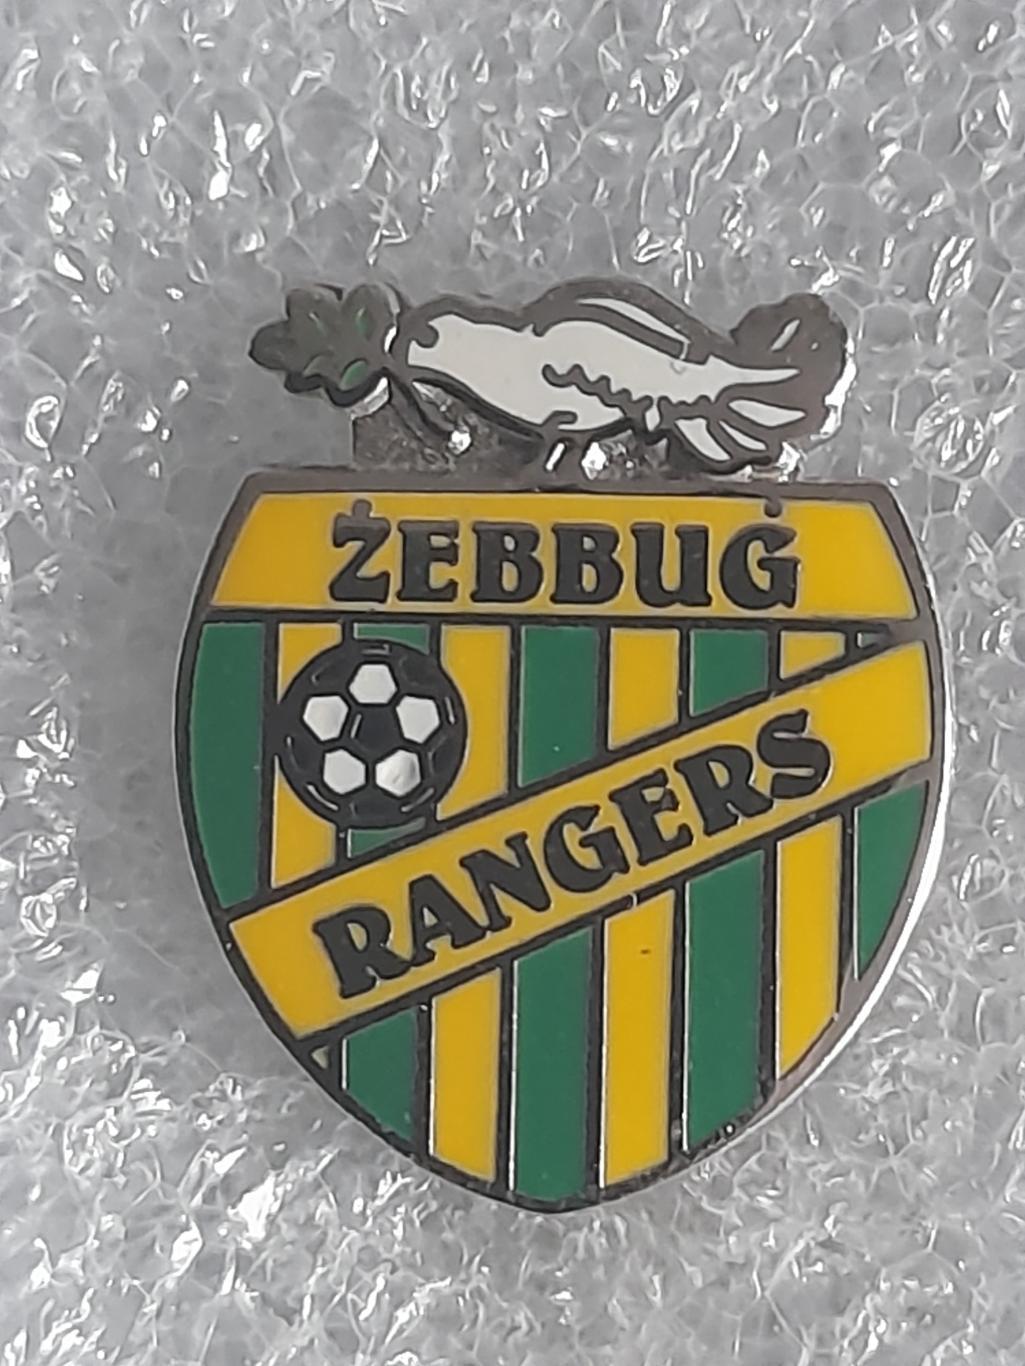 ФК Зеббудж Рейнджерс (Мальта) / Zebbug Rangers FC, Malta